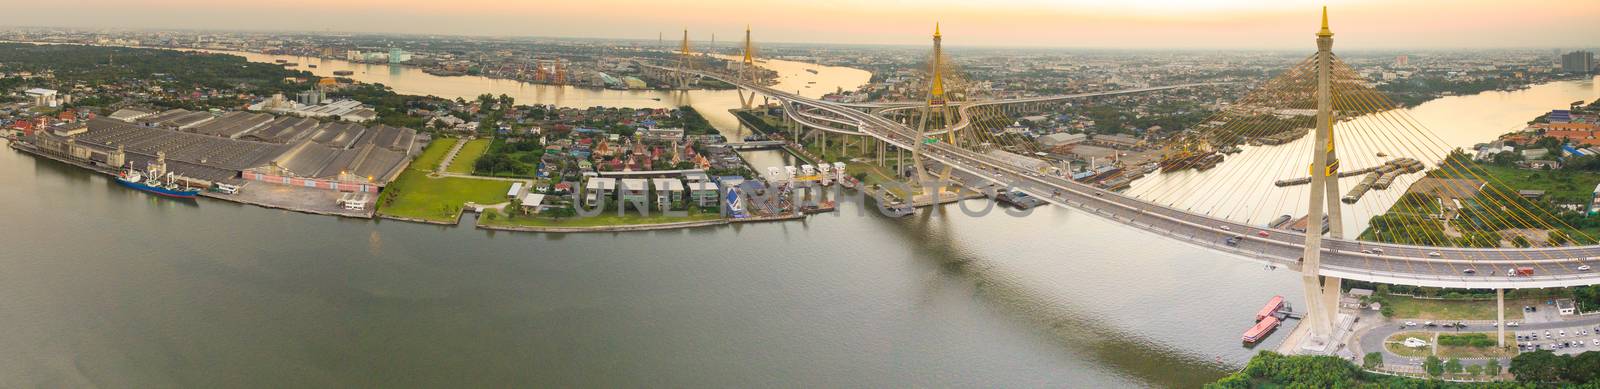 panorama view of bhumibol bridge crossing chaopraya river  important transportation landmark in bangkok thailand capital